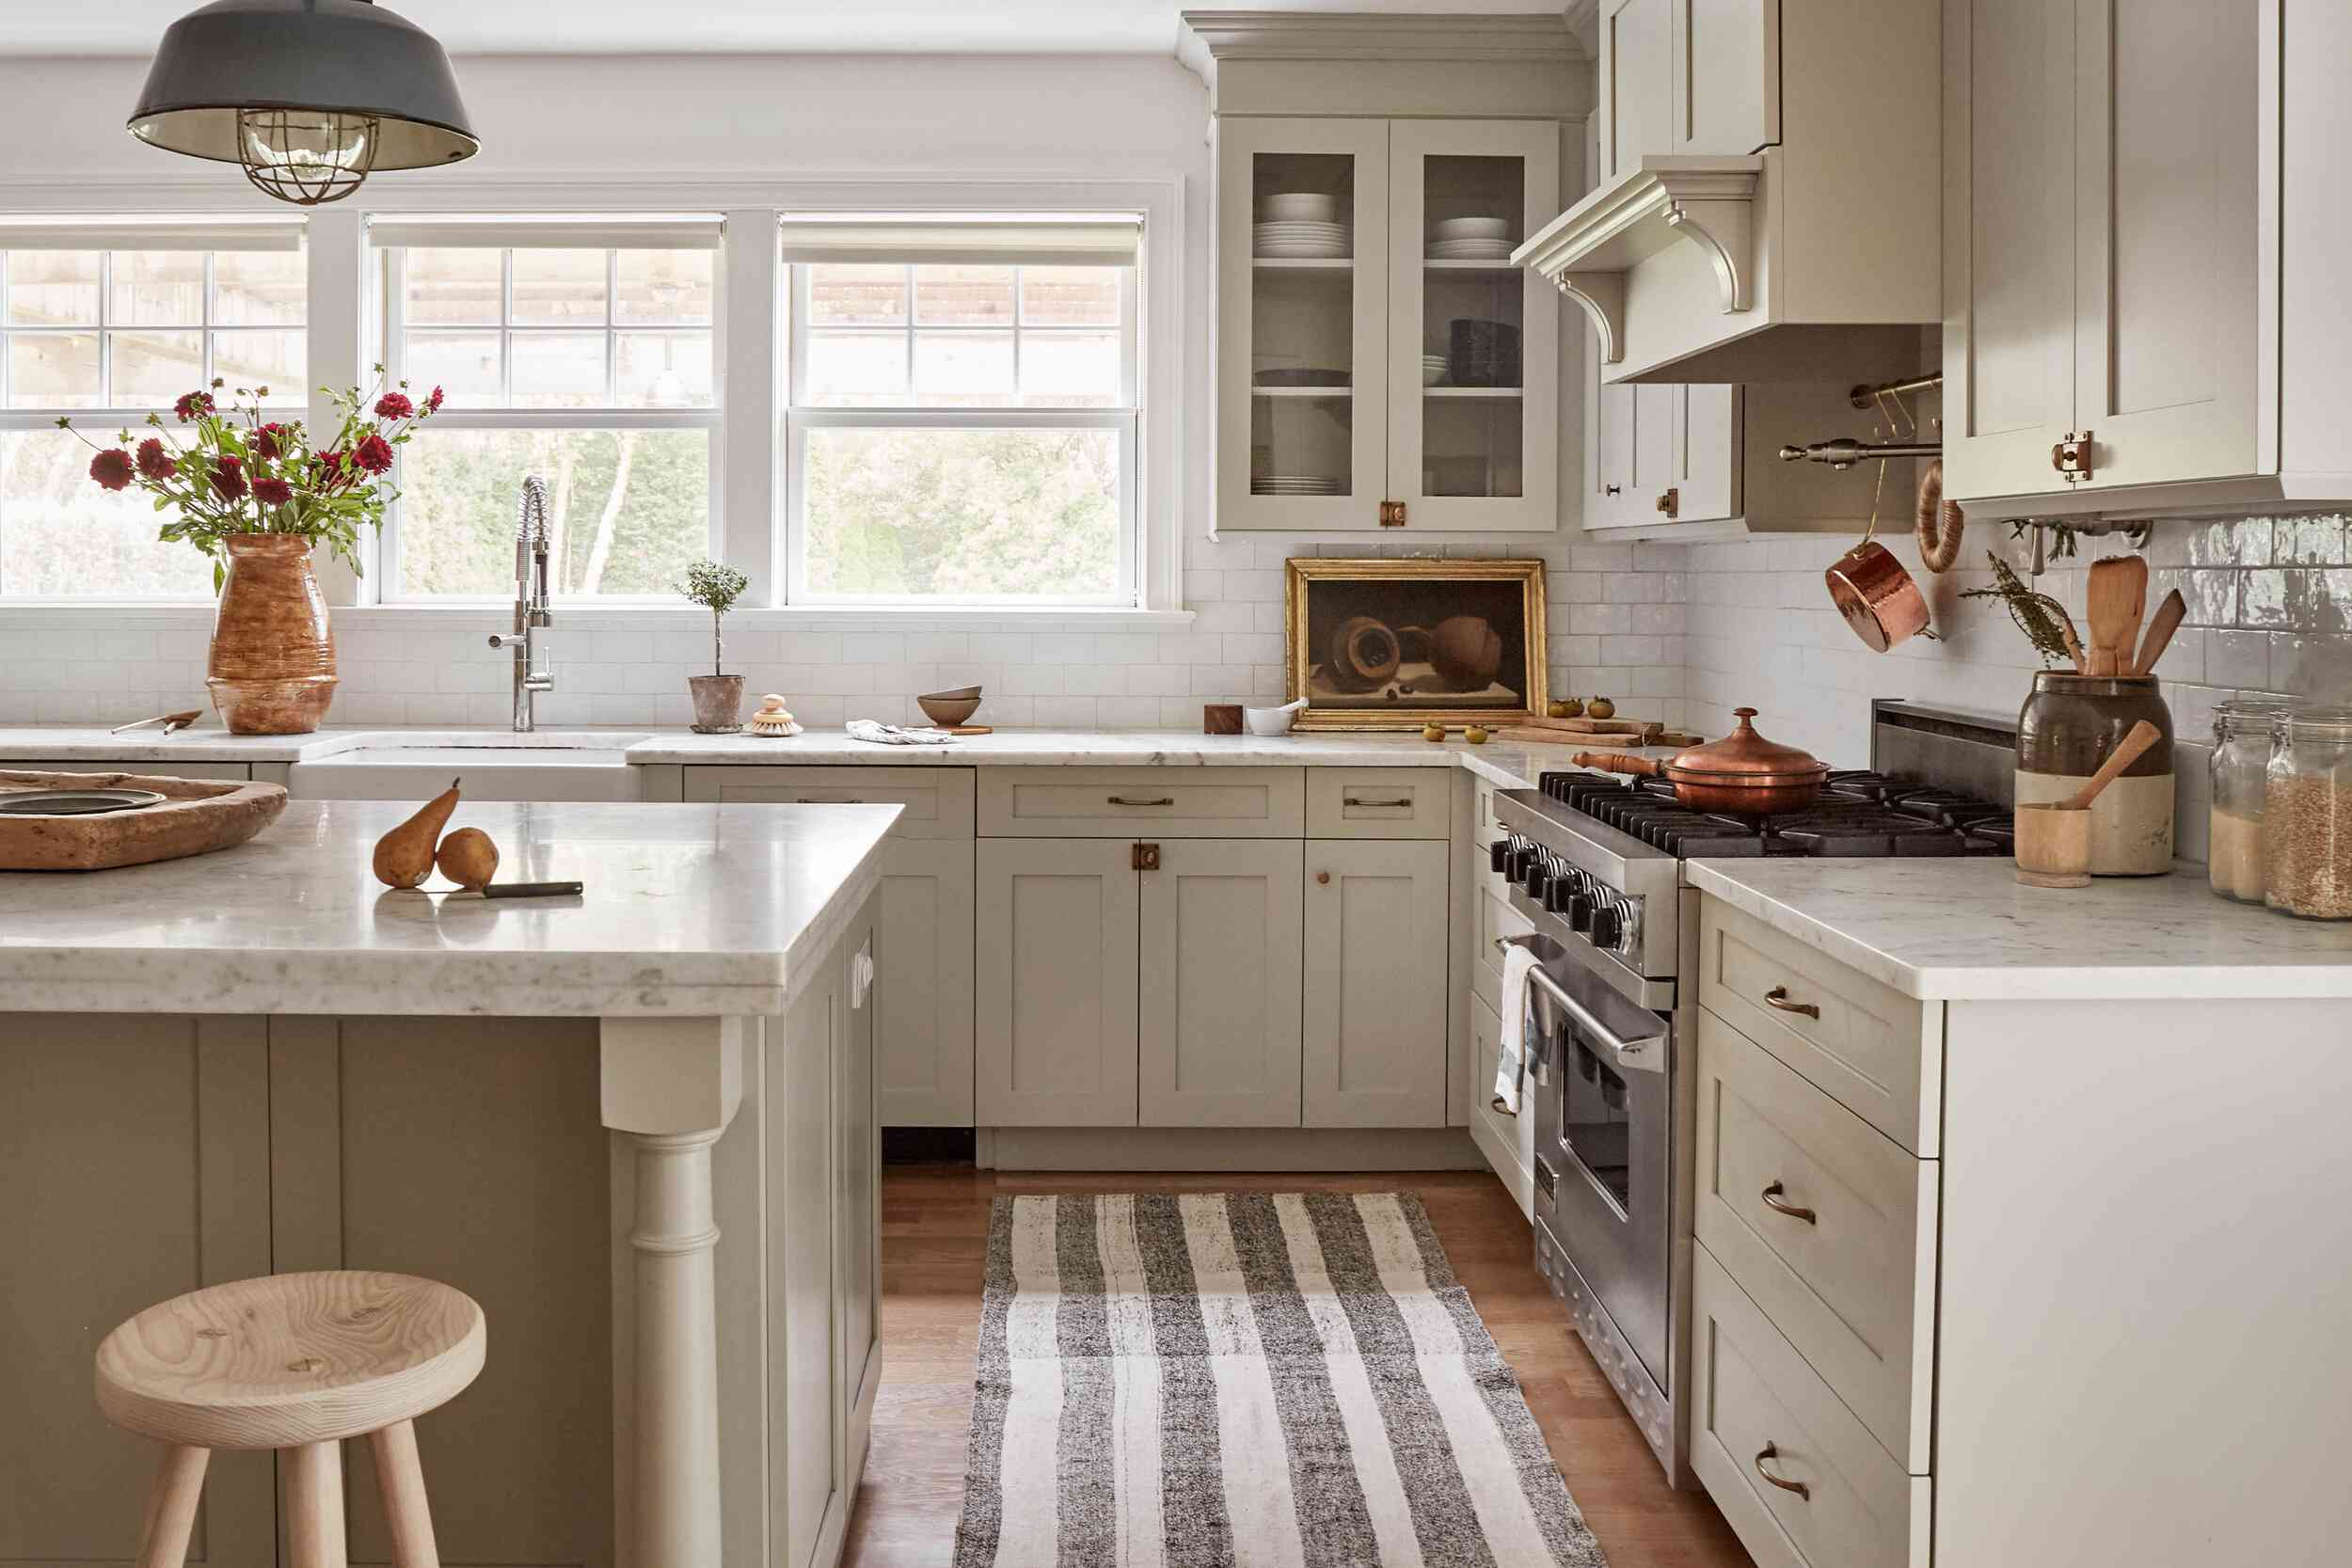 Country kitchen island ideas – 17 stylish storage-packed designs your kitchen needs